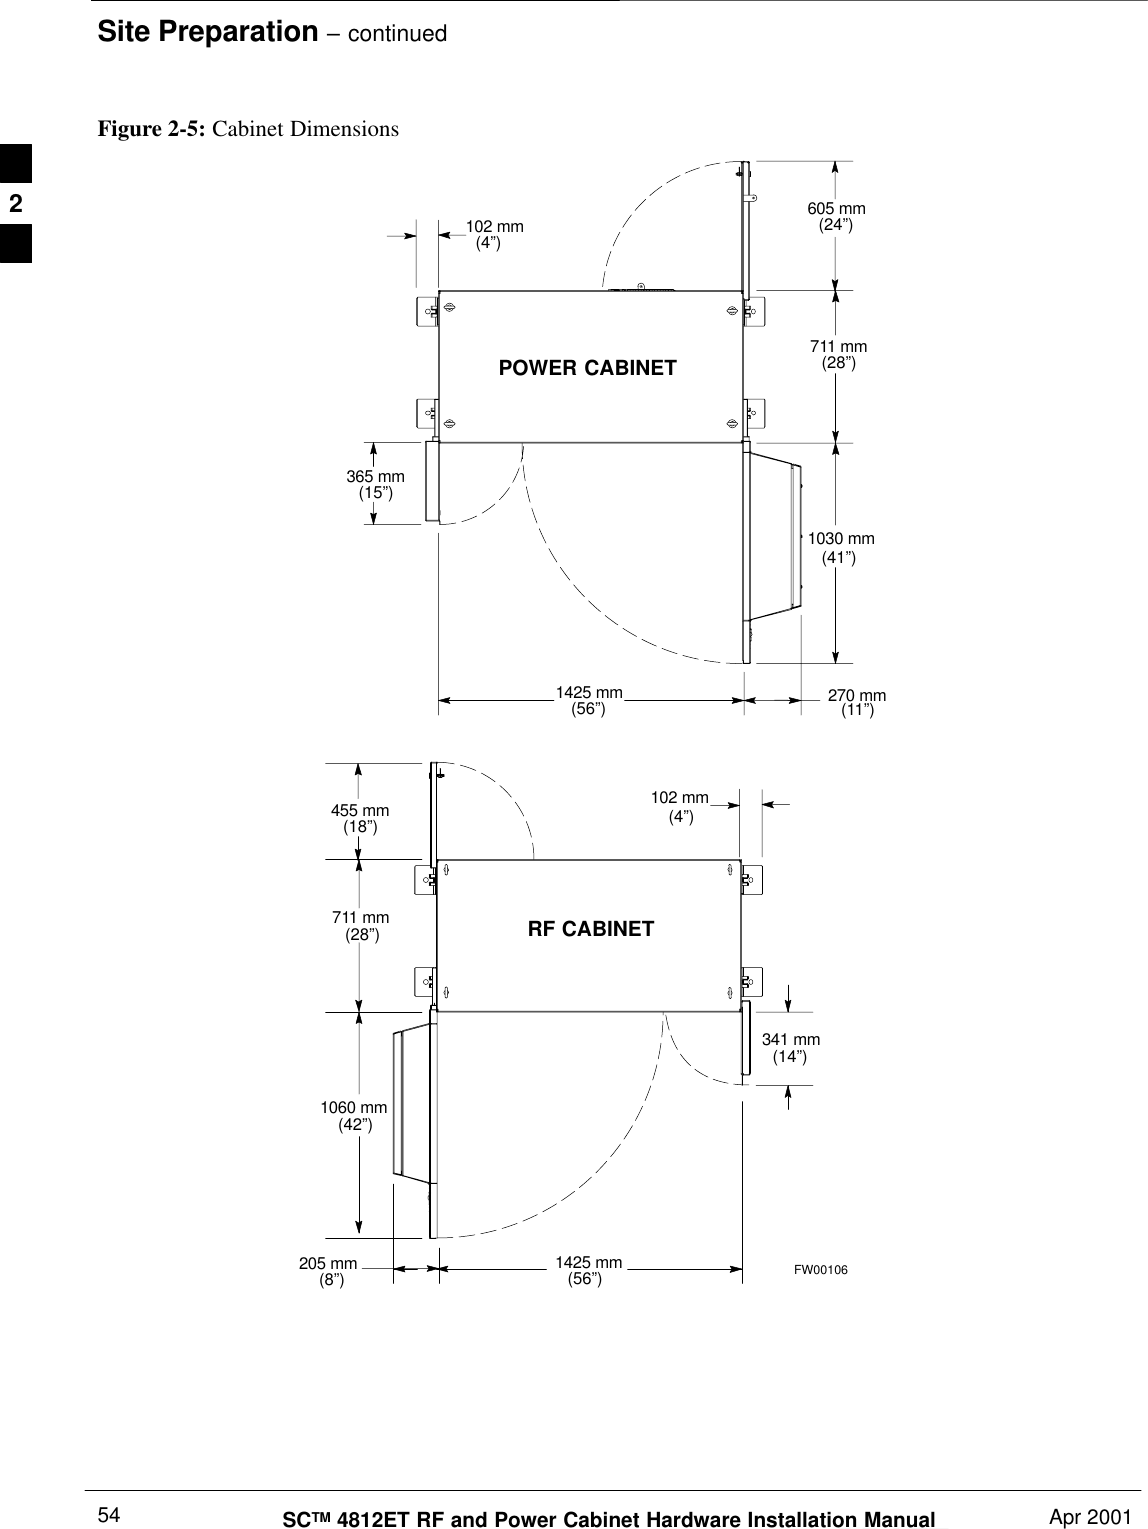 Site Preparation – continuedDRAFTSCTM 4812ET RF and Power Cabinet Hardware Installation Manual Apr 200154POWER CABINETRF CABINET102 mm(4”)365 mm(15”)711 mm(28”)605 mm(24”)1030 mm(41”)1425 mm(56”)270 mm(11”)711 mm(28”)455 mm(18”)1060 mm(42”)1425 mm(56”)205 mm(8”)102 mm(4”)341 mm(14”)Figure 2-5: Cabinet DimensionsFW001062